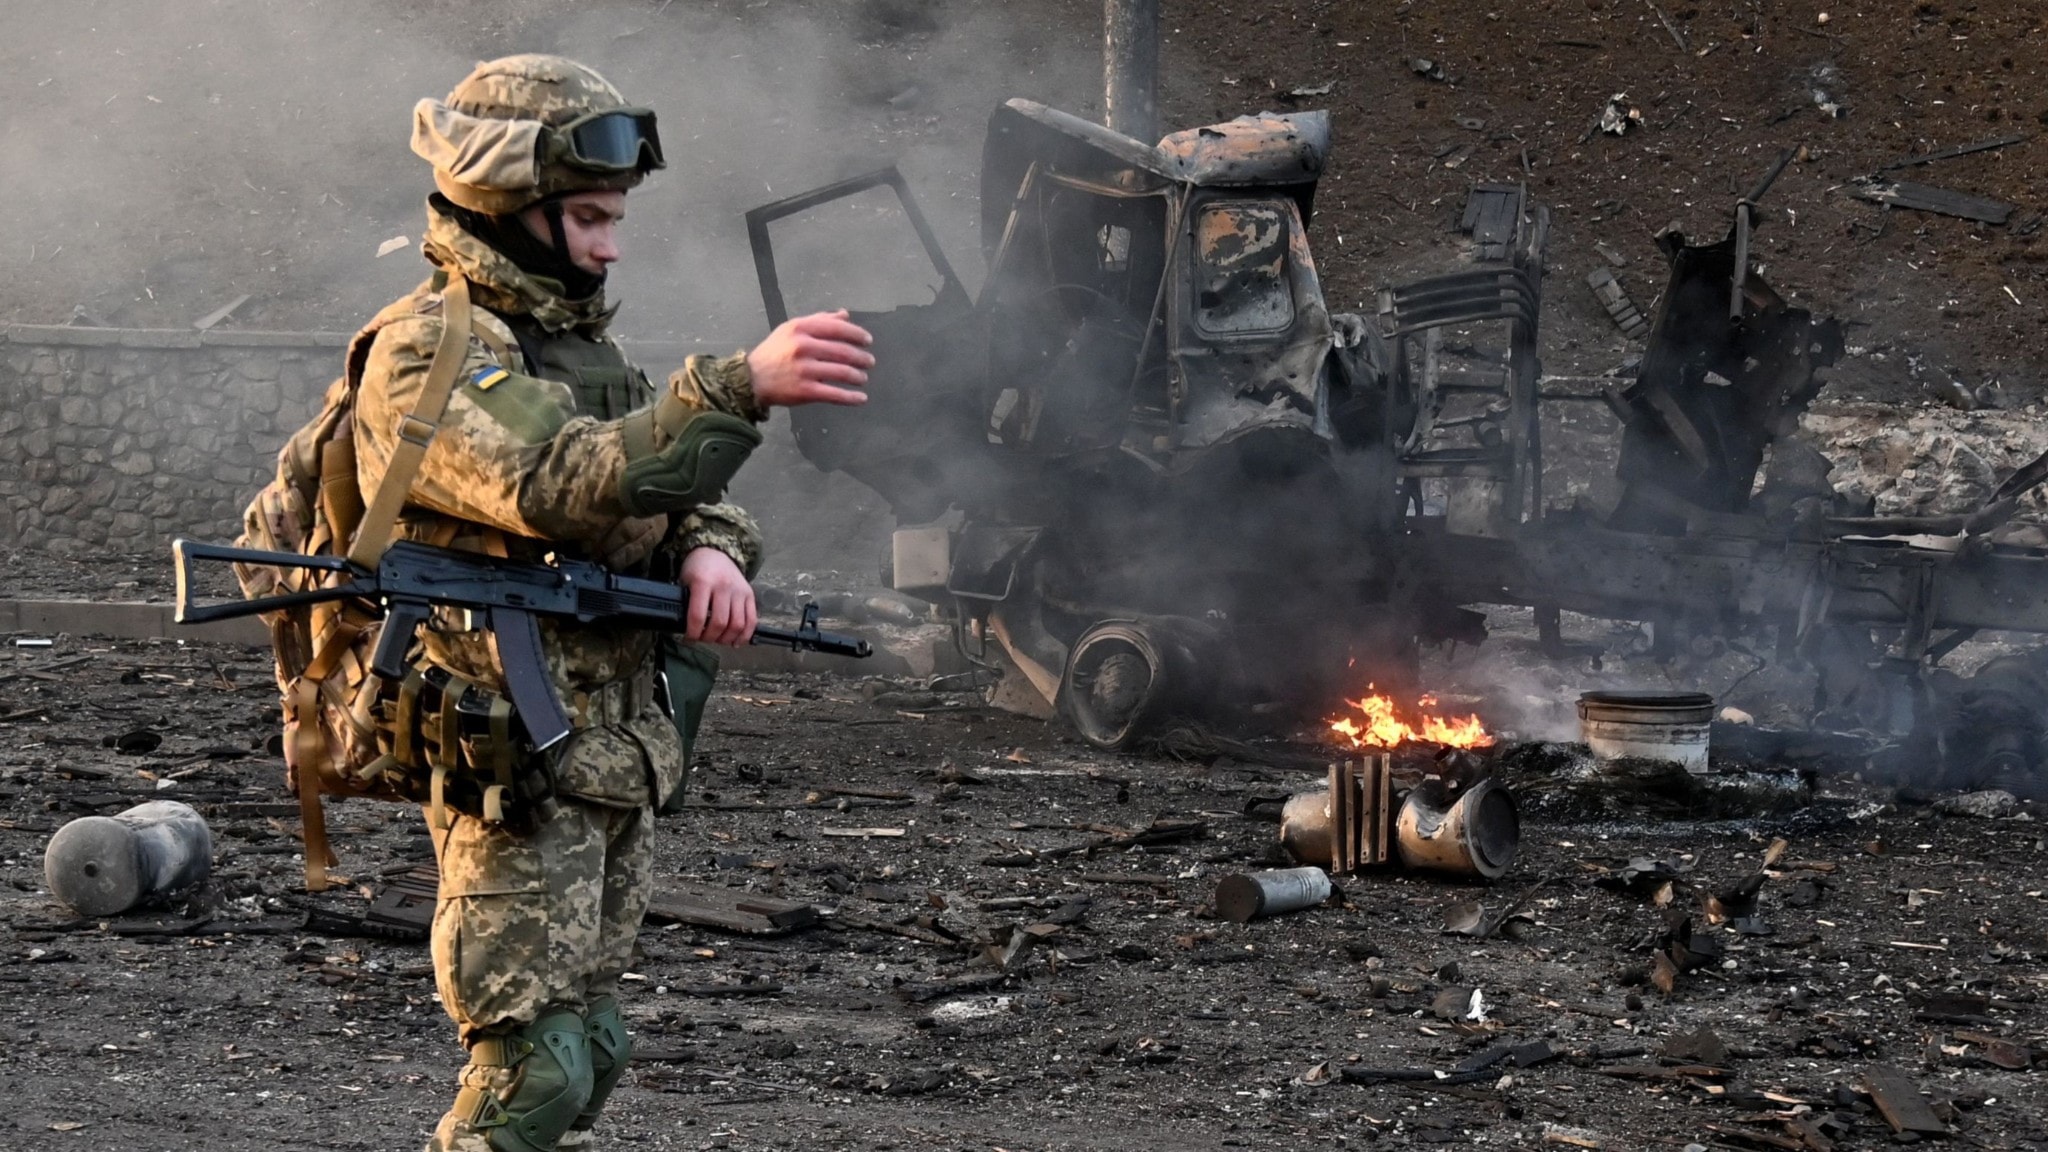 Farlig lek med elden i Ukrainakonflikten